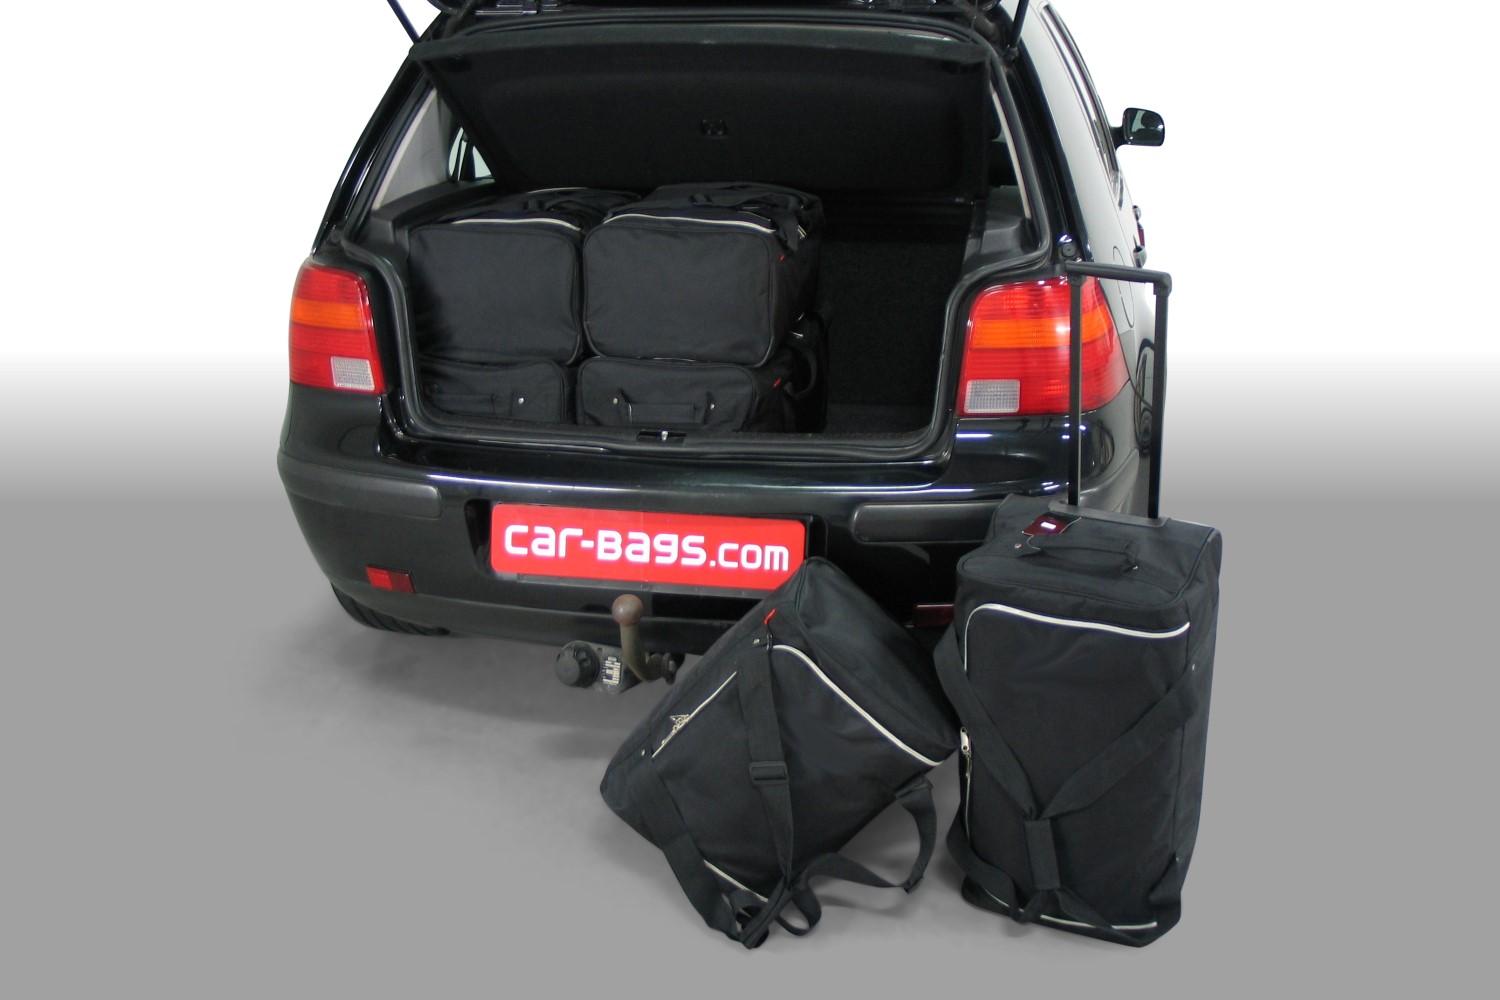 Car Bags VW Golf 4 1997-2003